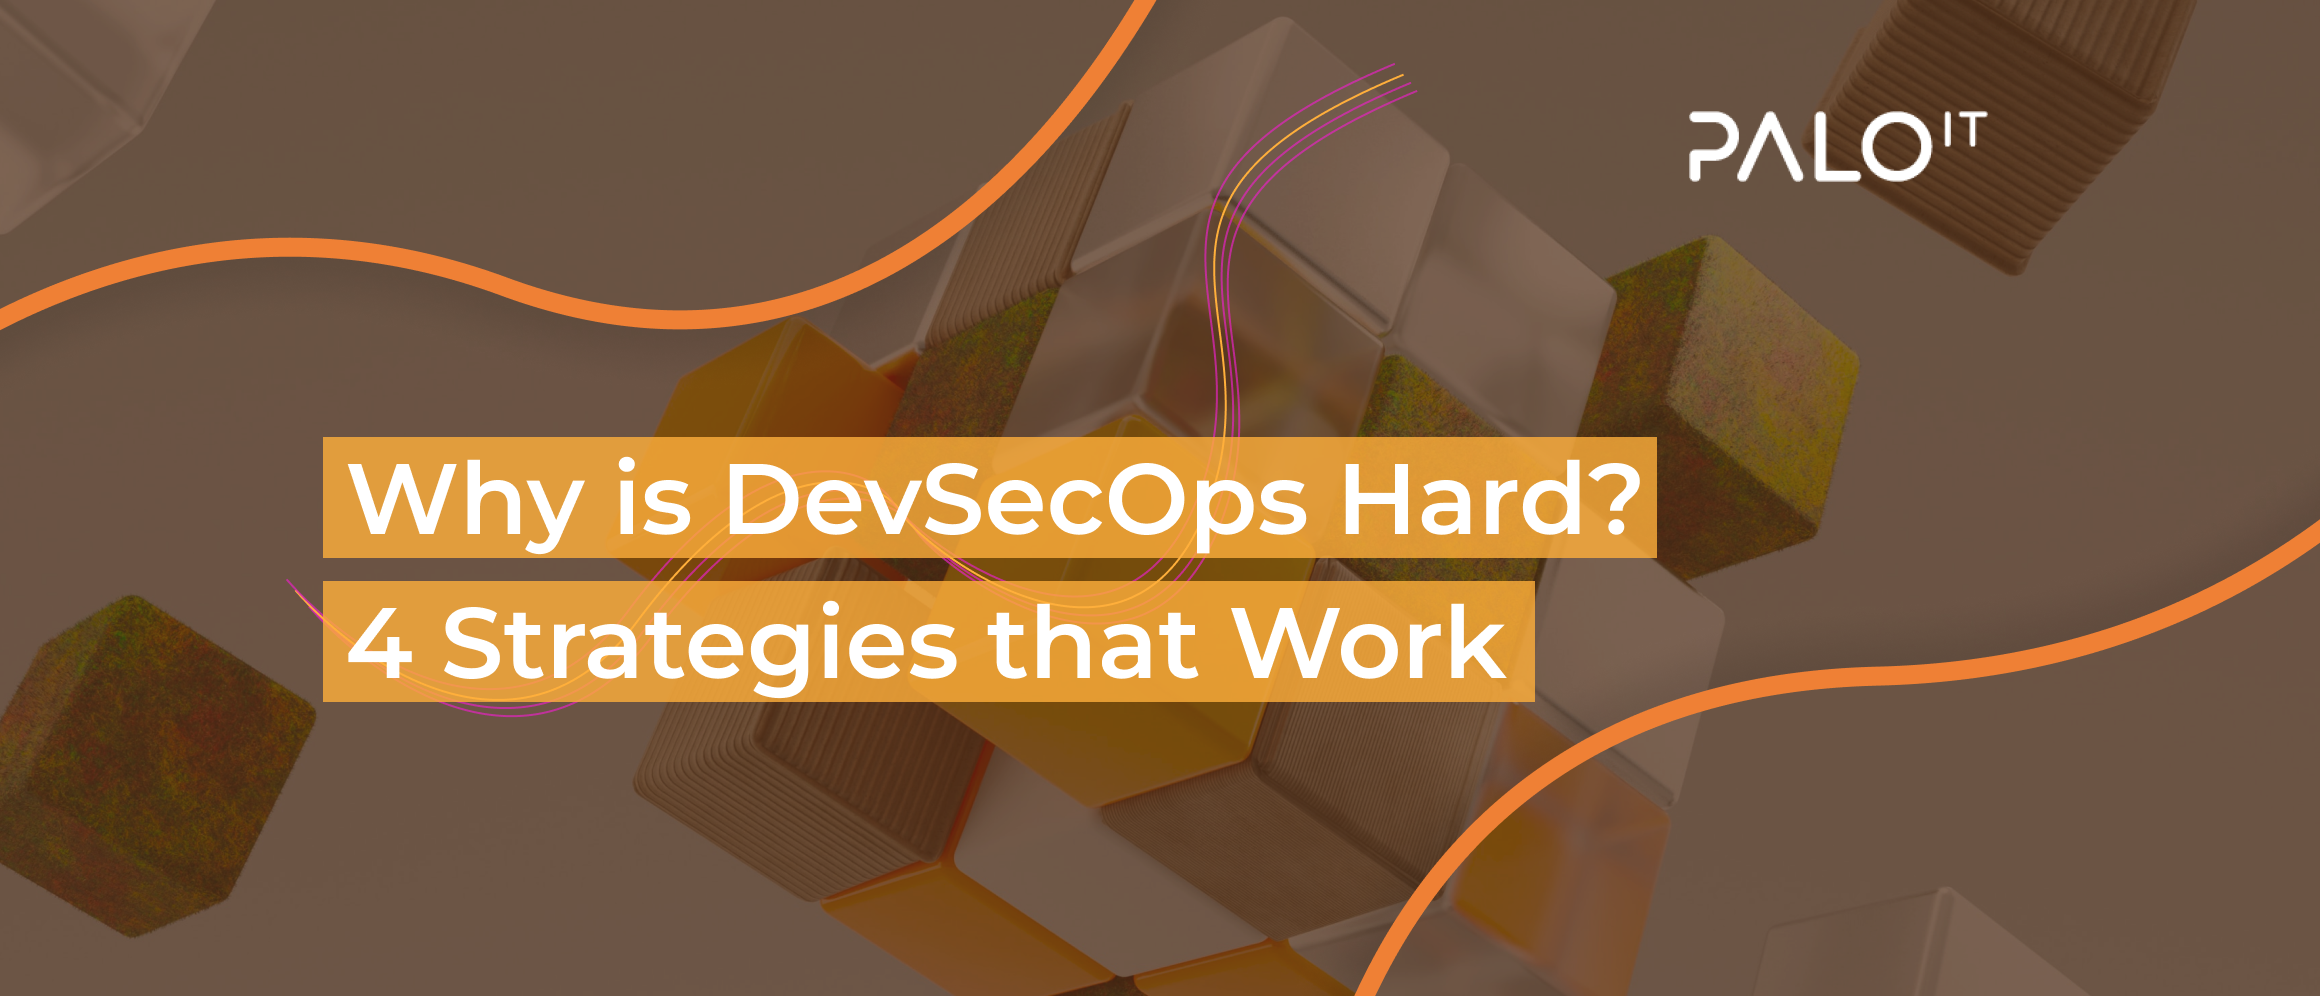 Why is DevSecOps hard? 4 strategies that work